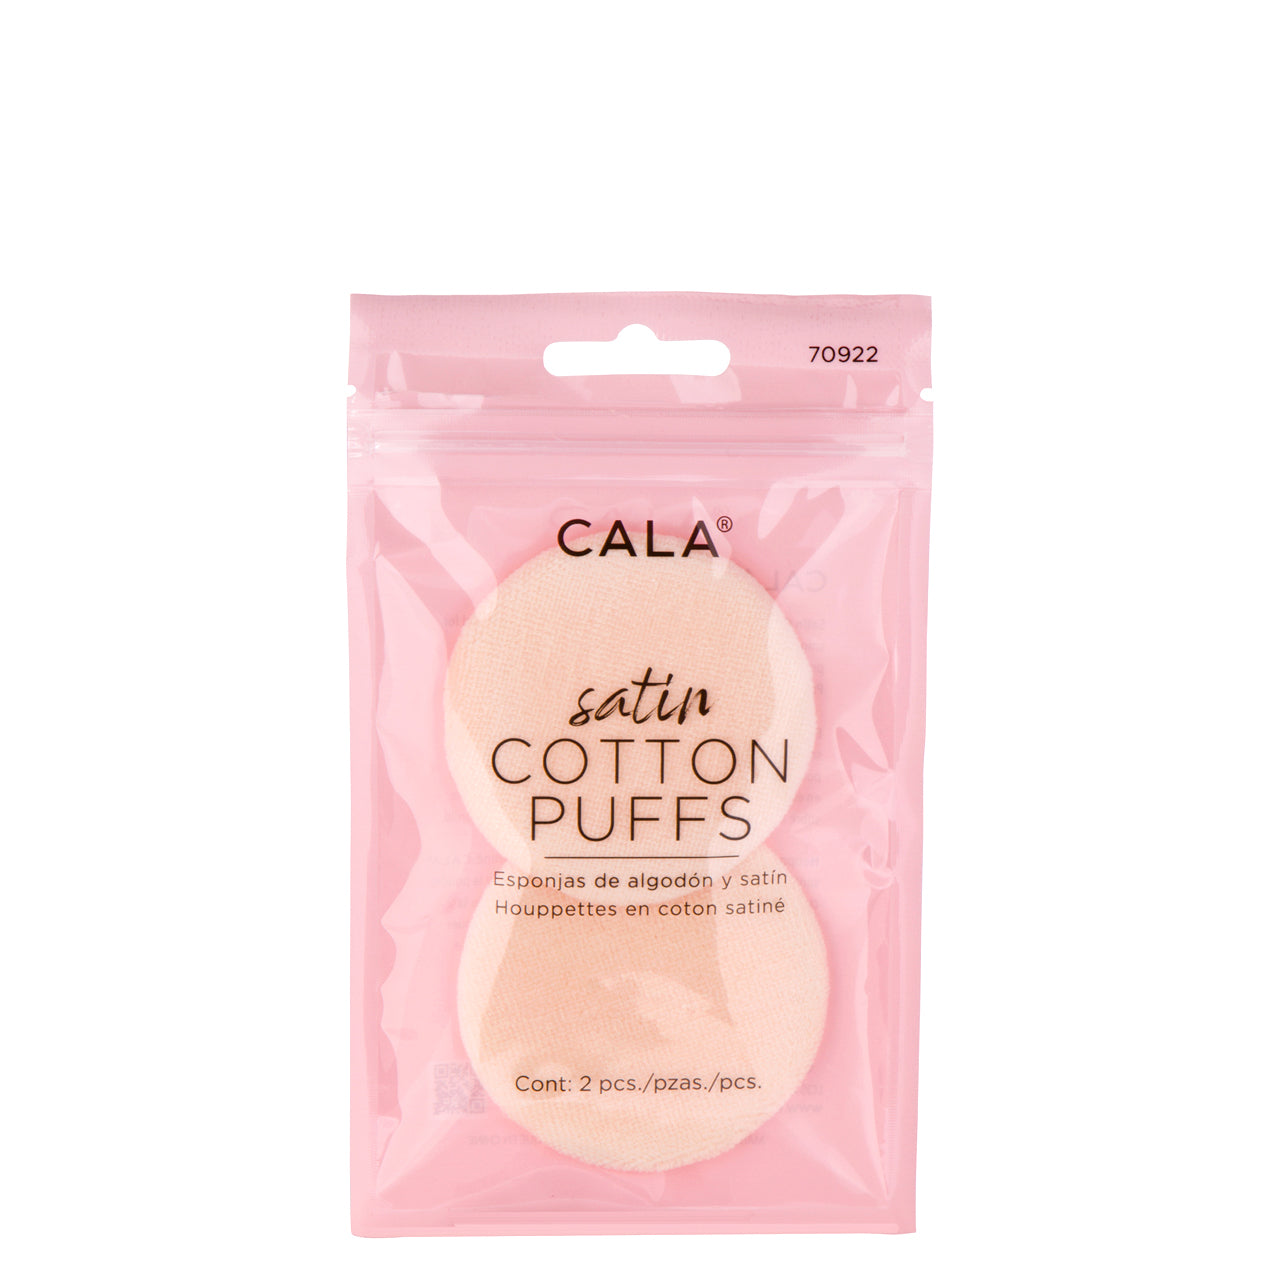 CALA SATIN COTTON PUFFS (2 Pcs / Pack)